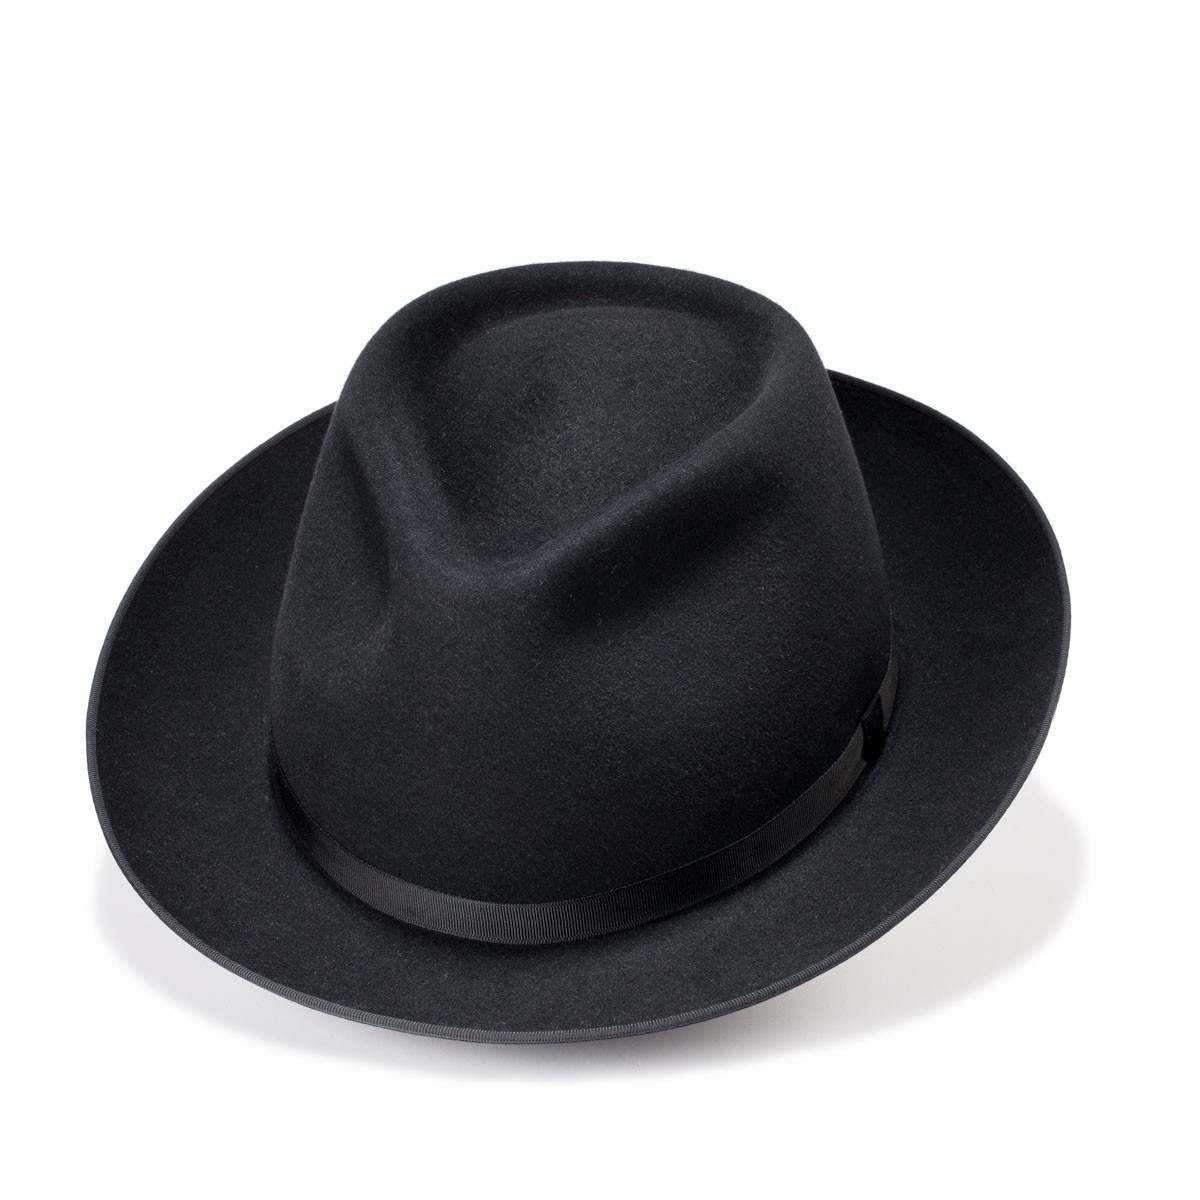 Telde felt hat with hairstyle tear crown black. Handmade in Spain. Fernandez Y Roche